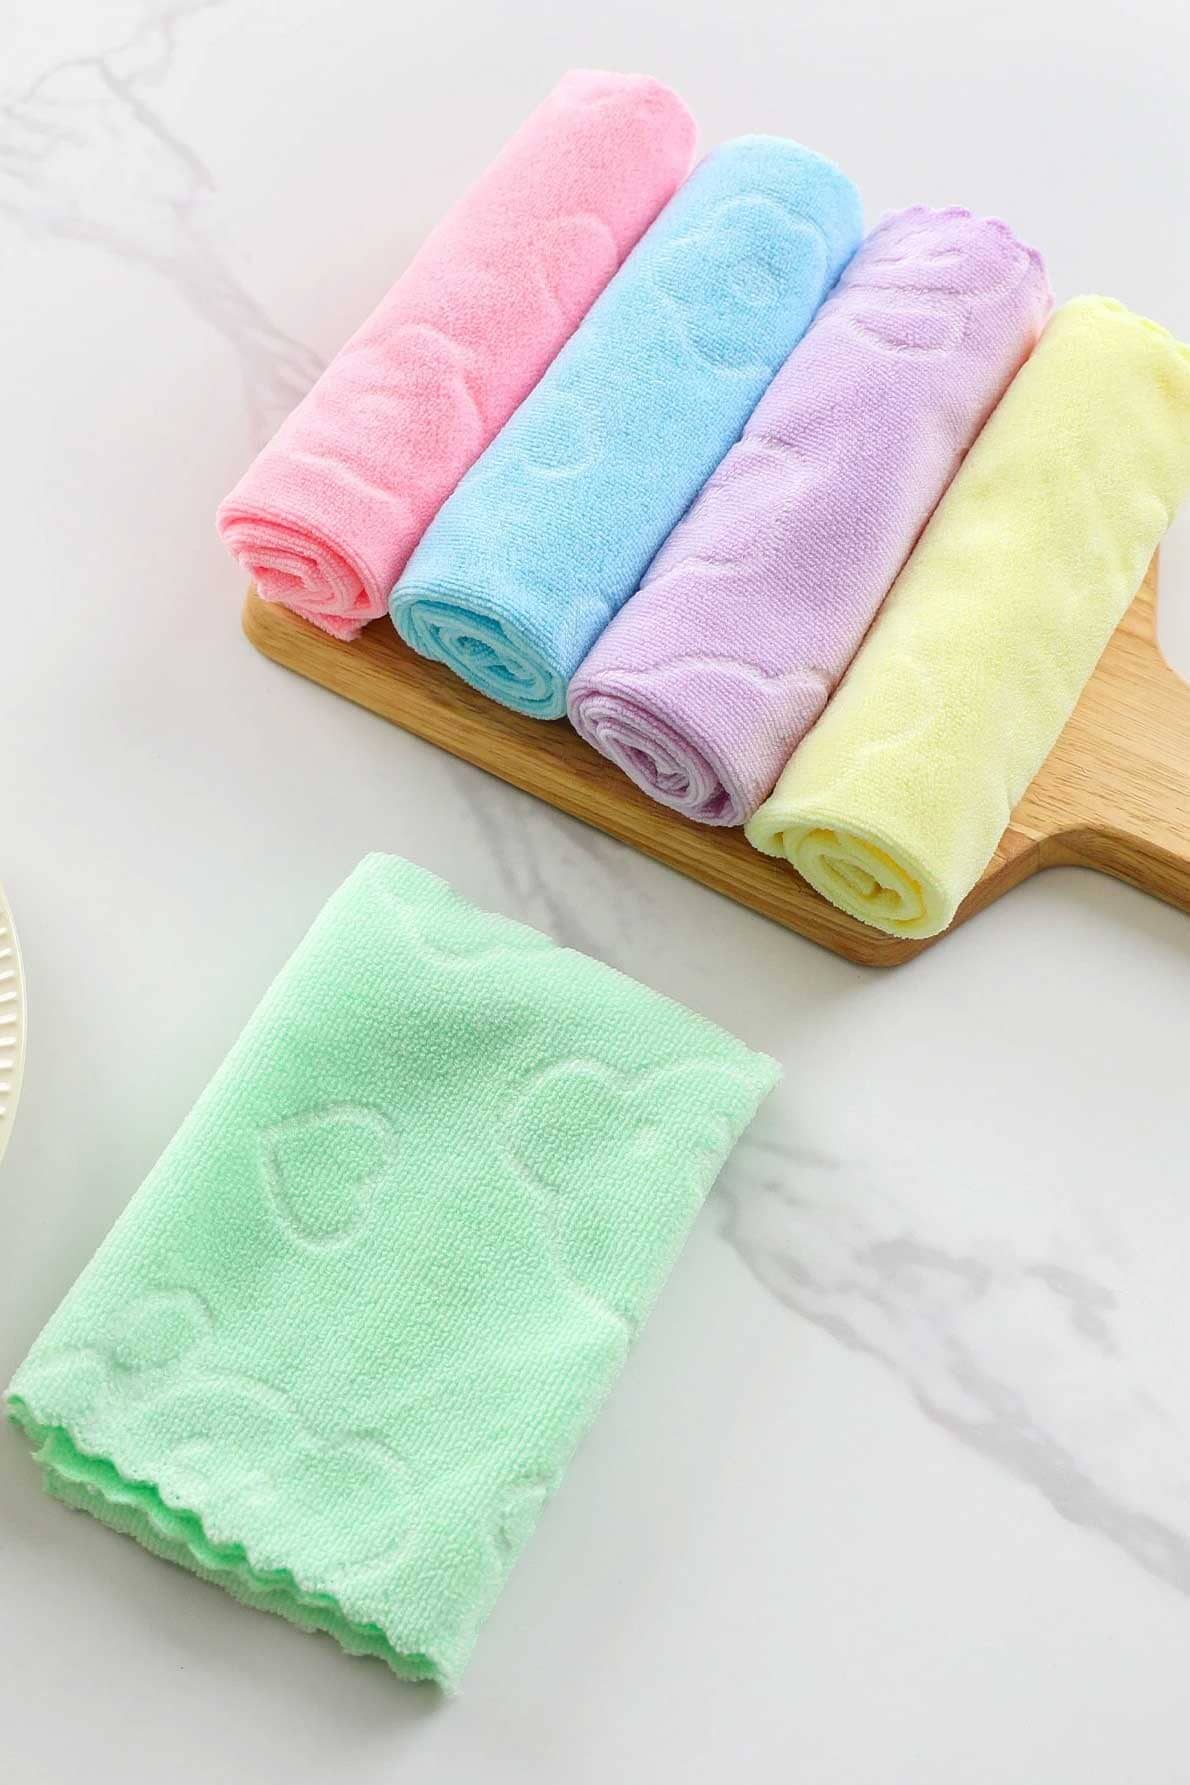 Posadas Mini Hand Towel Set - Pack Of 5 Towel SRL 